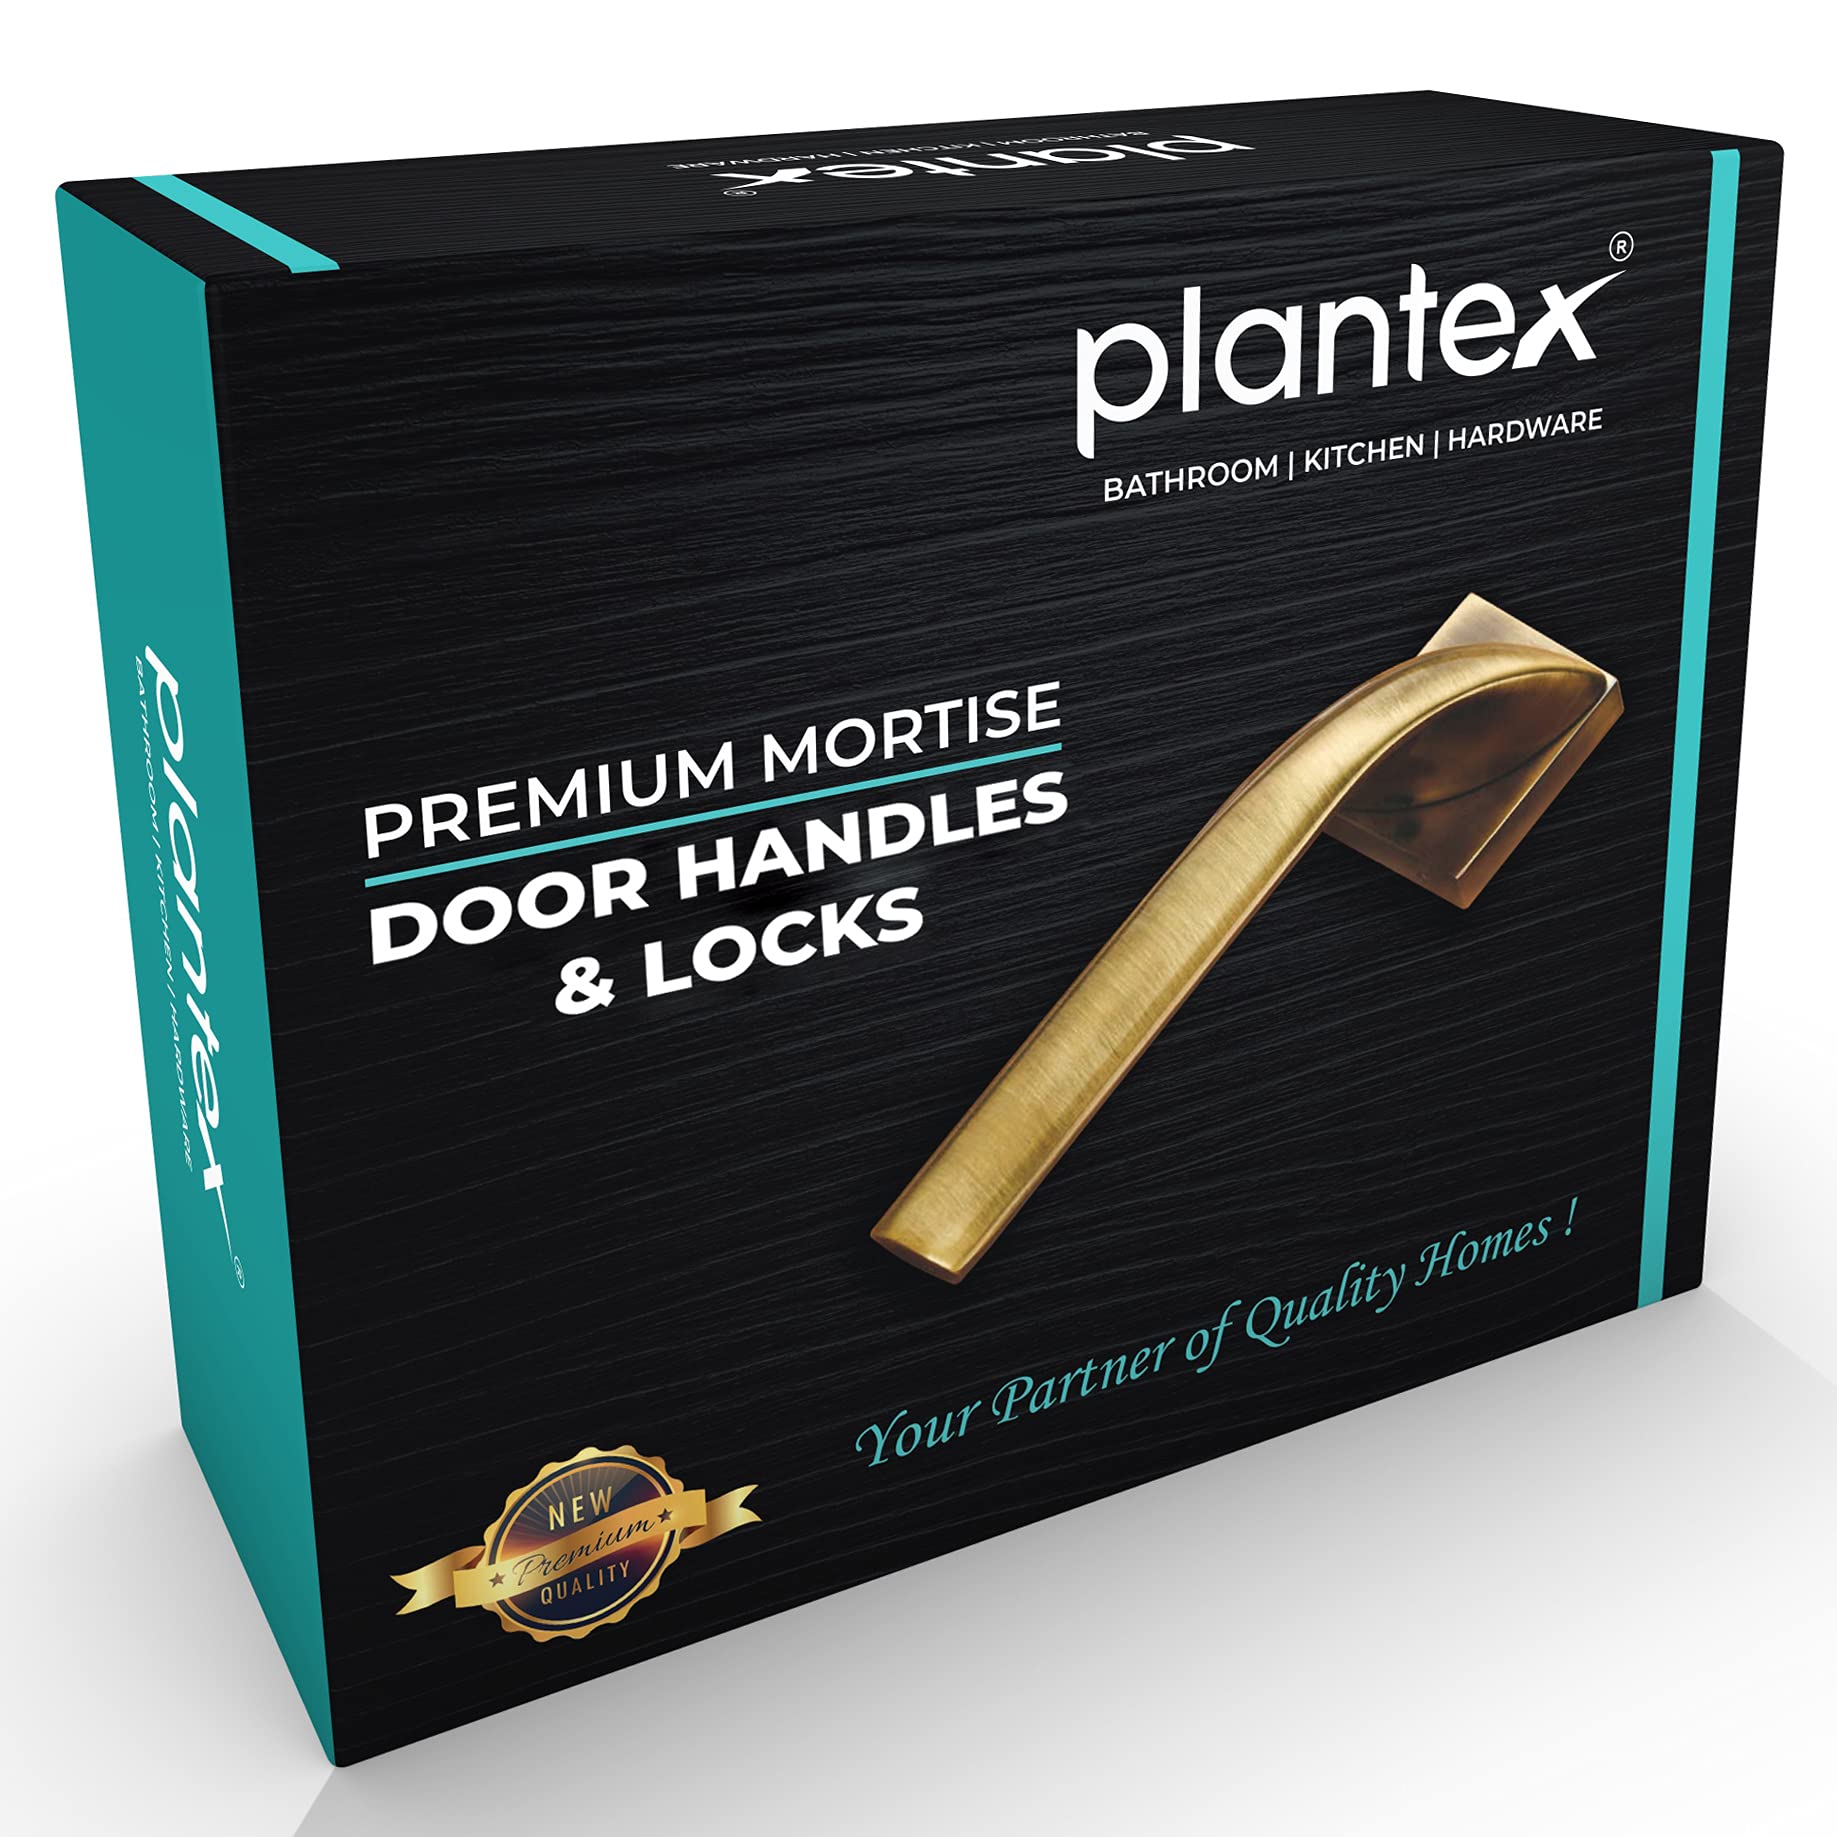 Plantex Door Lock 7093 7 Inch Handle Lock for Door 3 Keys/Mortise Lock for Home Office Hotel (Satin White & Chrome)